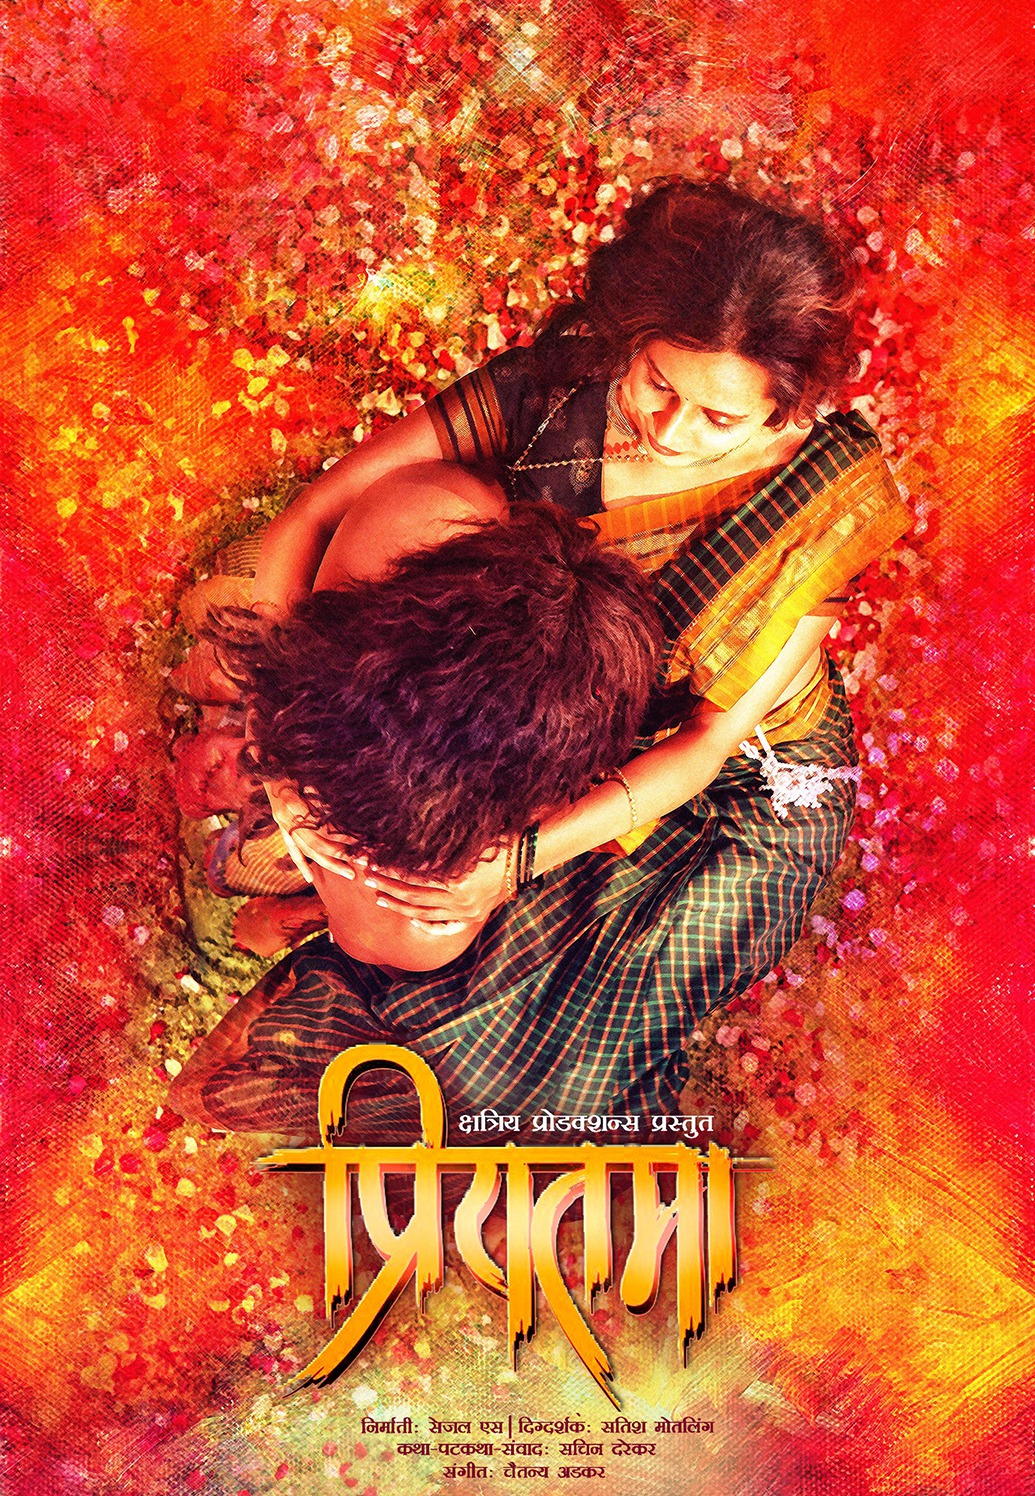 Extra Large Movie Poster Image for Priyatama (#1 of 9)